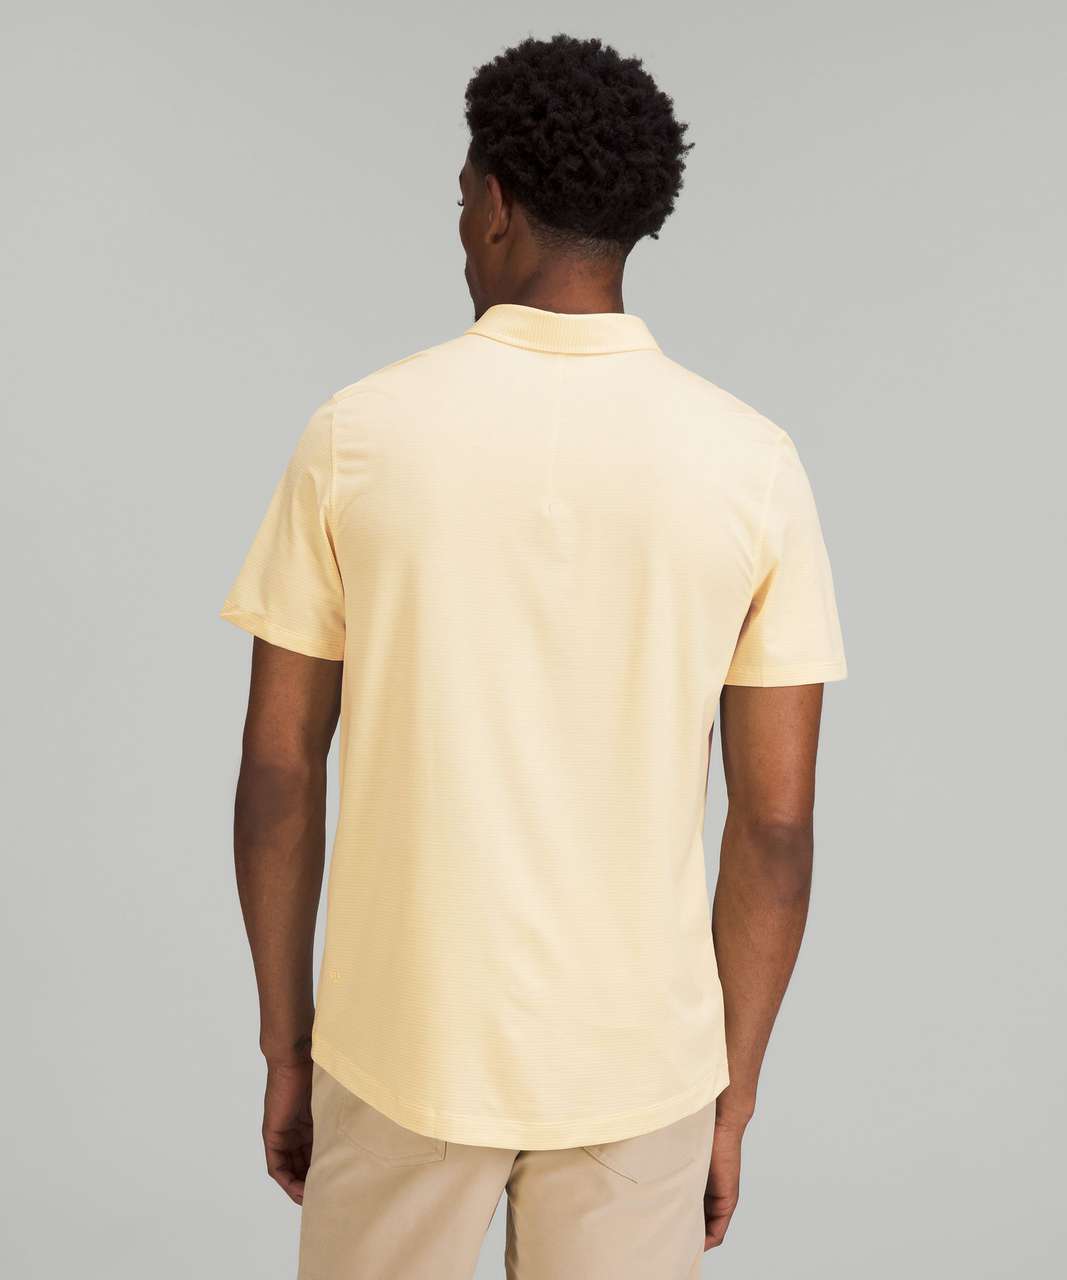 Lululemon Evolution Short Sleeve Polo Shirt - Lemon Chiffon